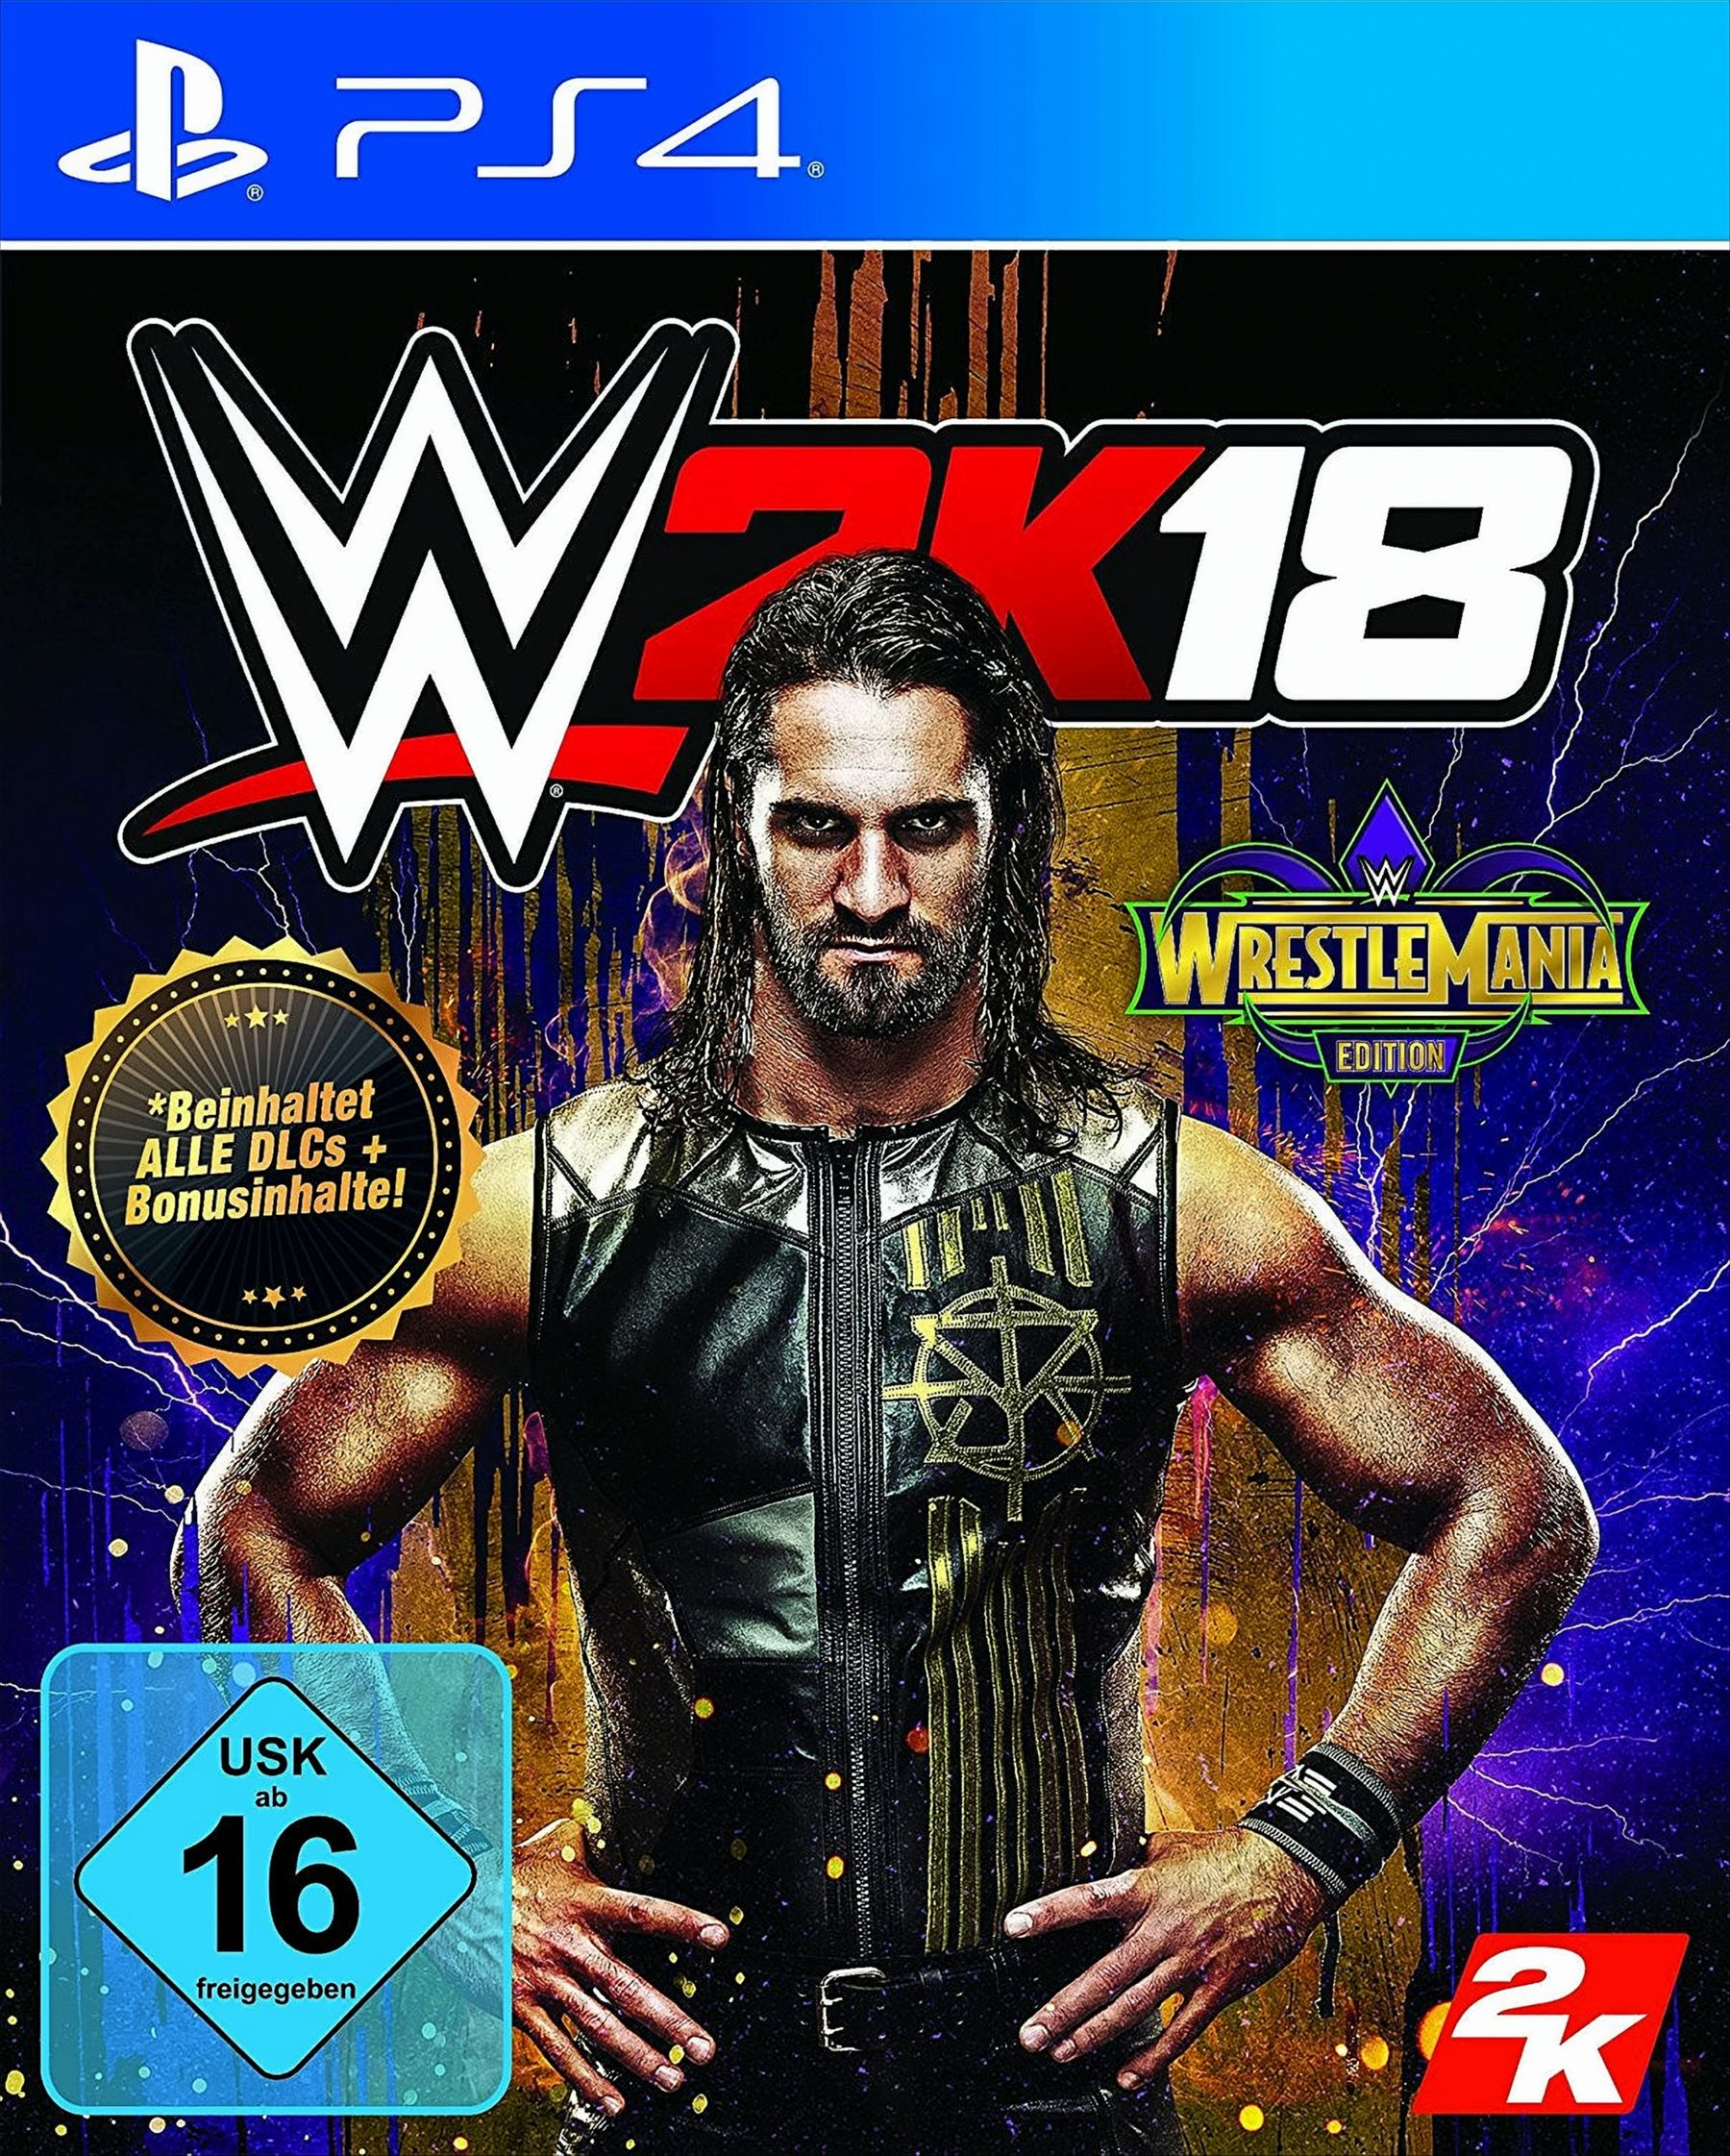 - Edition Wrestlemania [PlayStation 2K18 WWE 4] PS4